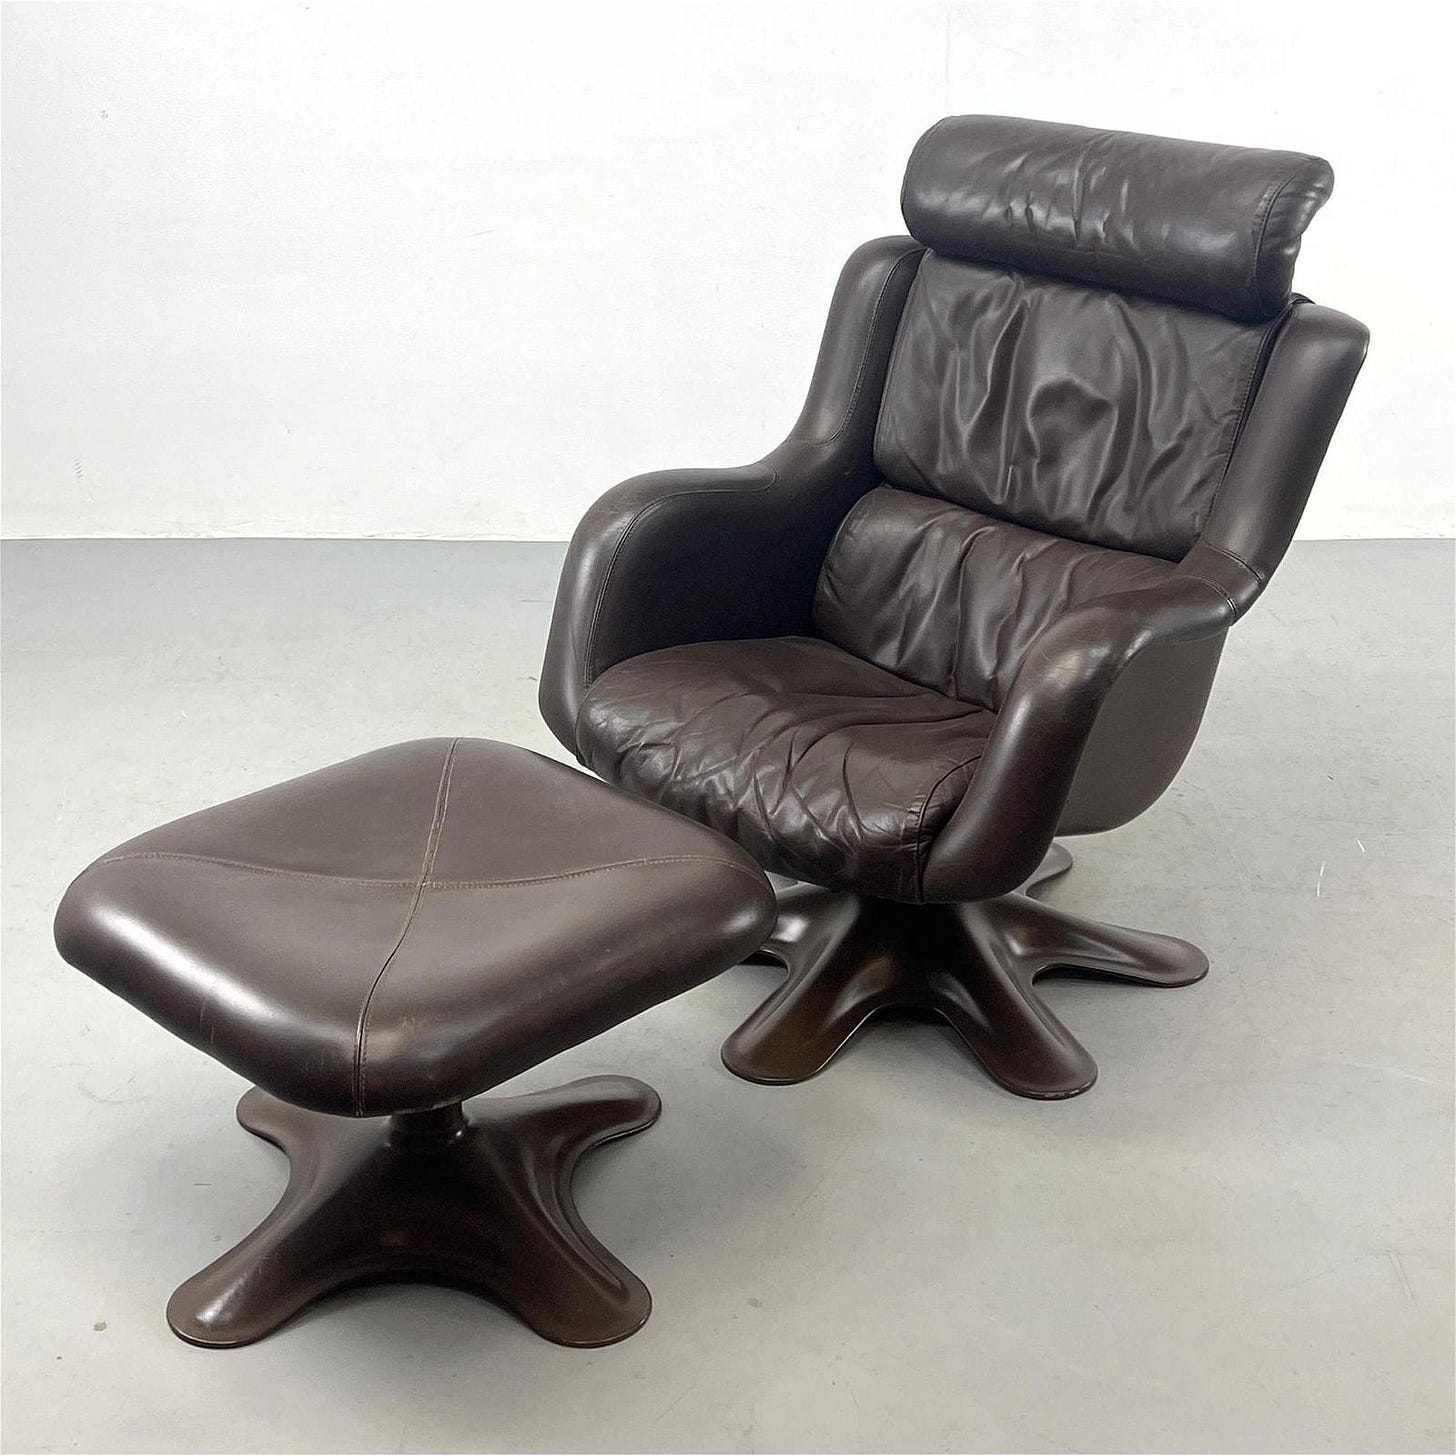 YRJO KUKKAPURO Lounge Chair and Ottoman. HAIMI Finland. Leather. Stool dimensions: 14 x 21.5 x 21.5